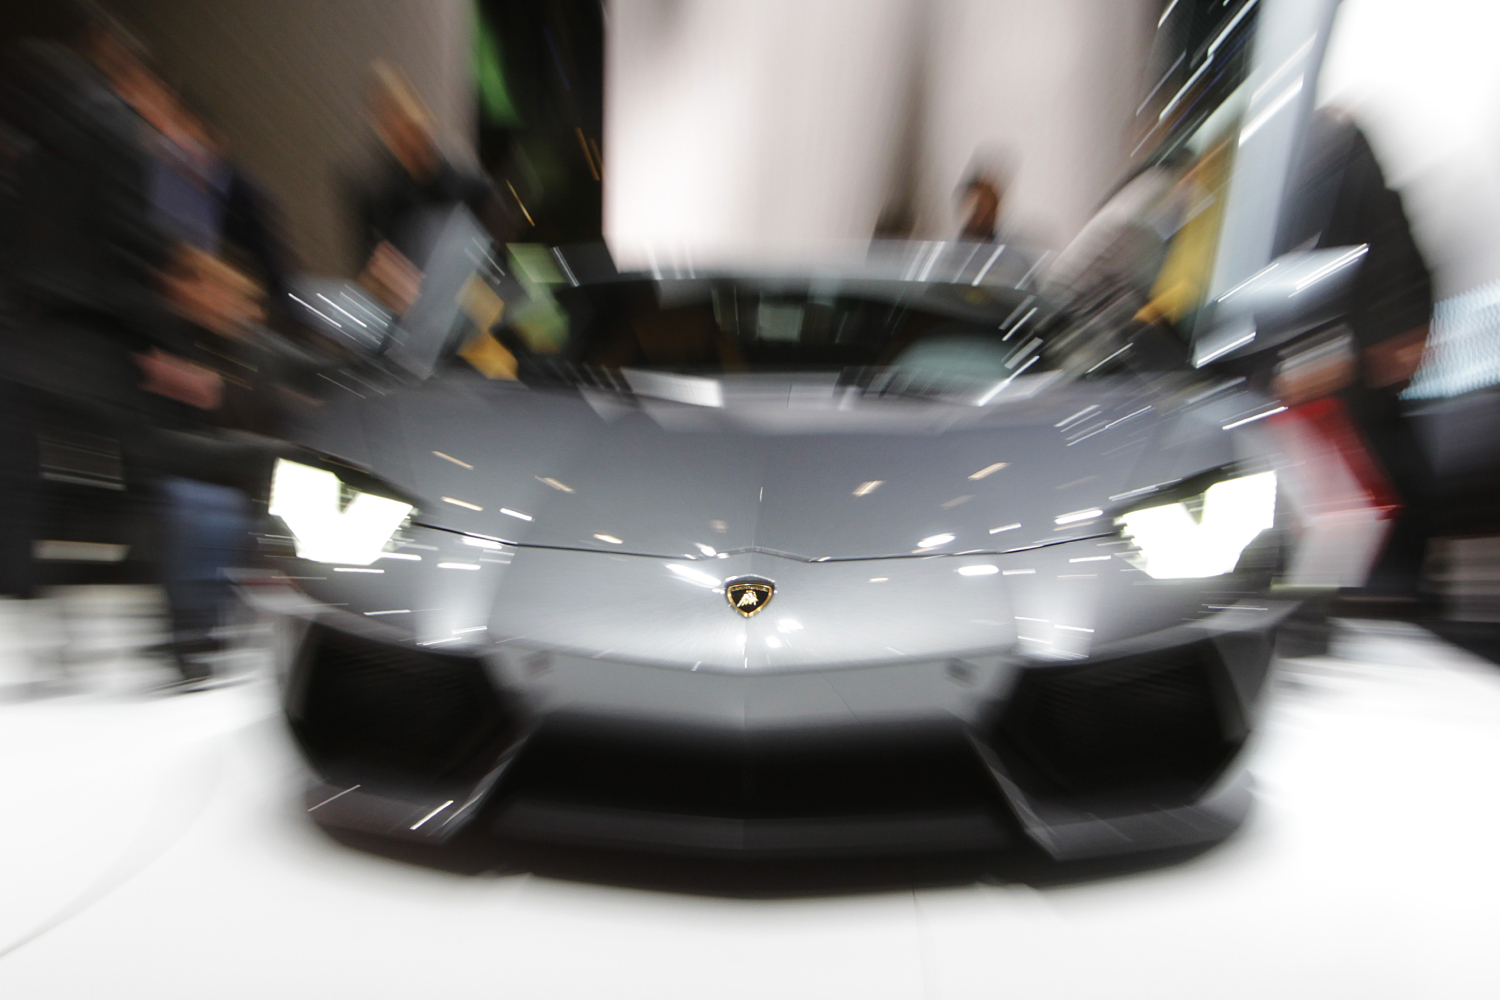 The Lamborghini Aventador belonging to Matt Heller sideswiped an Audi and the drama unfolded on TikTok.